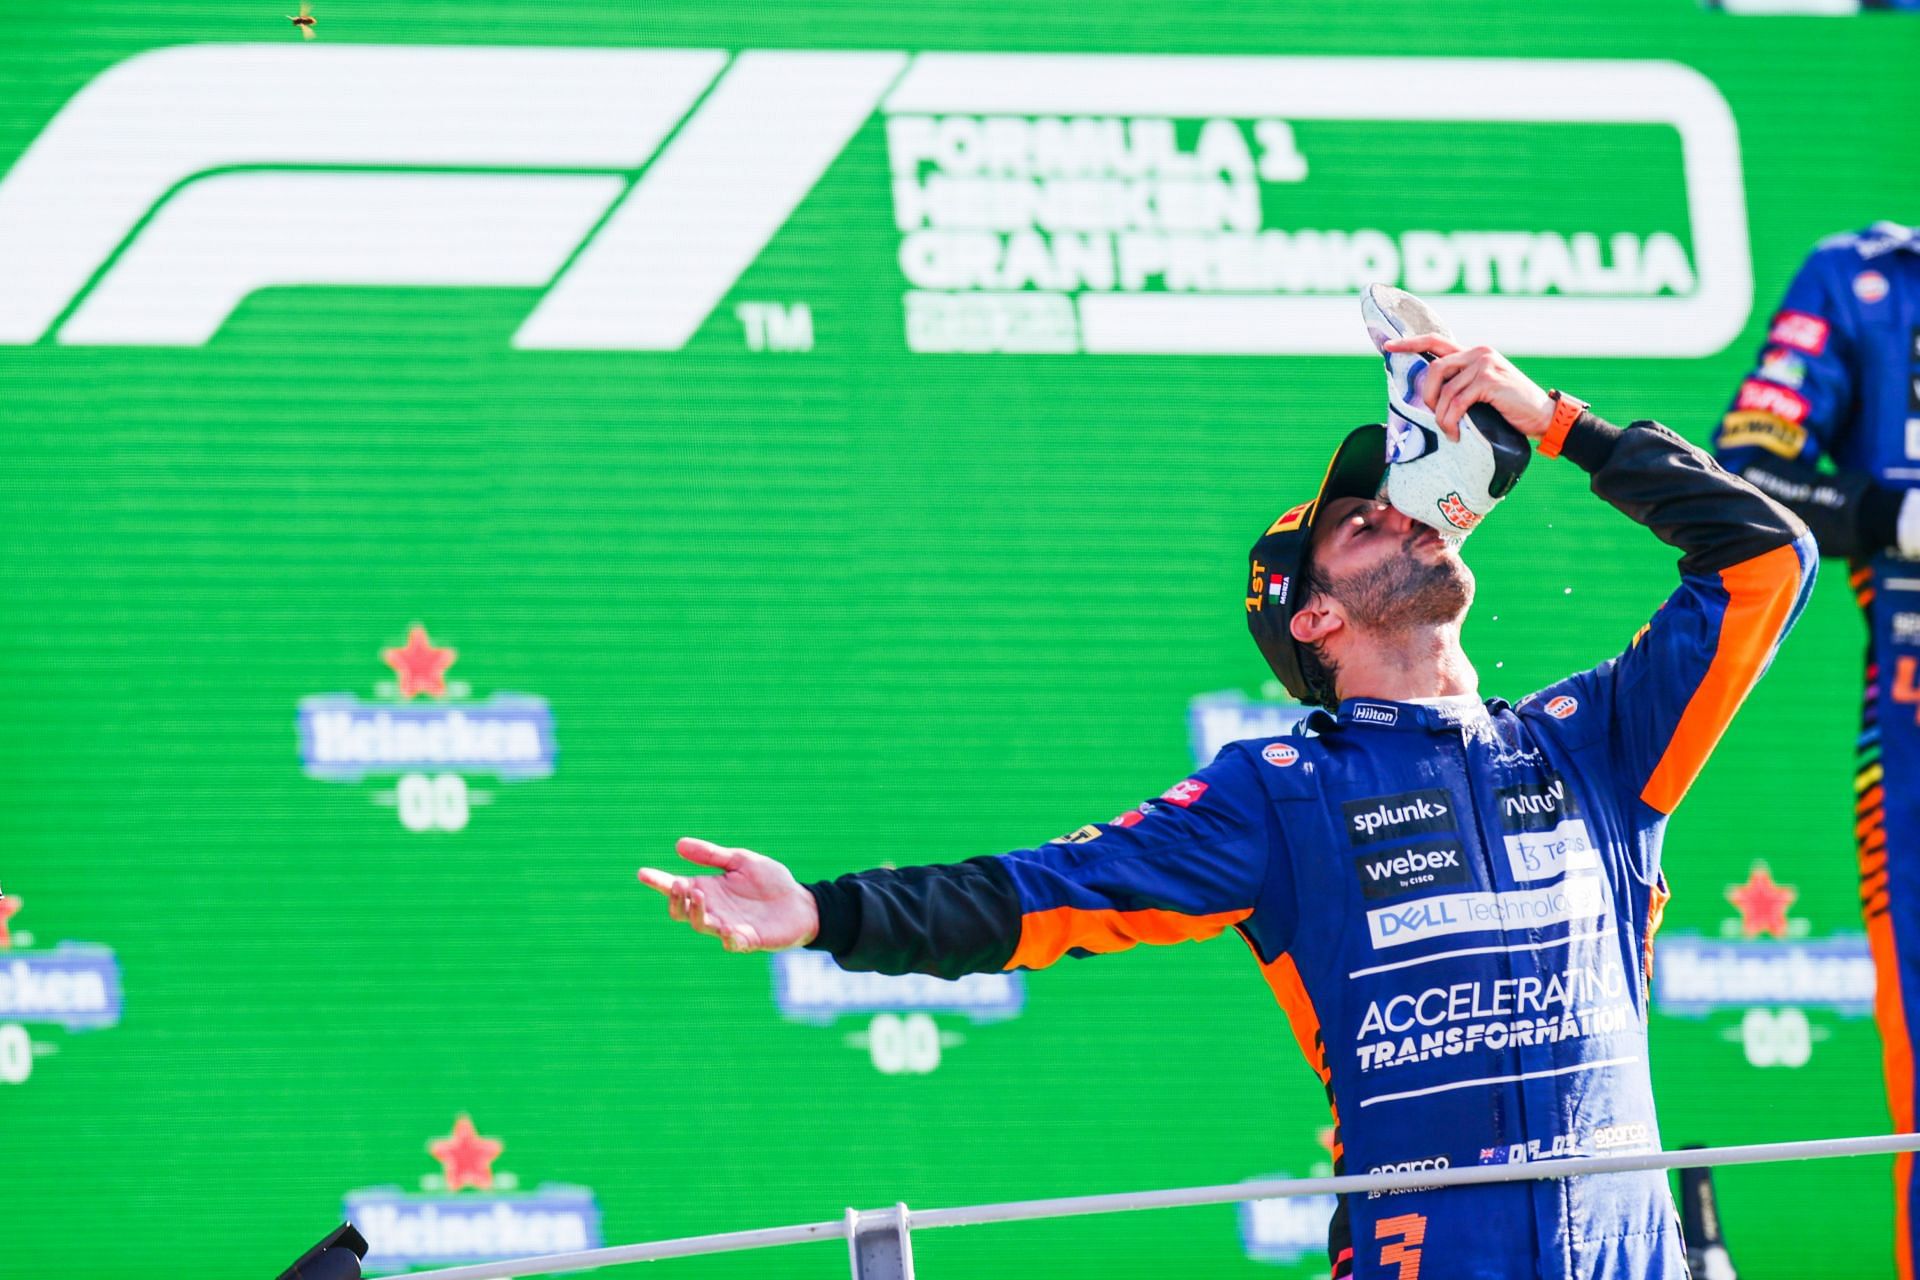 F1 Grand Prix of Italy - Daniel Ricciardo celebrates with his iconic Shoey.